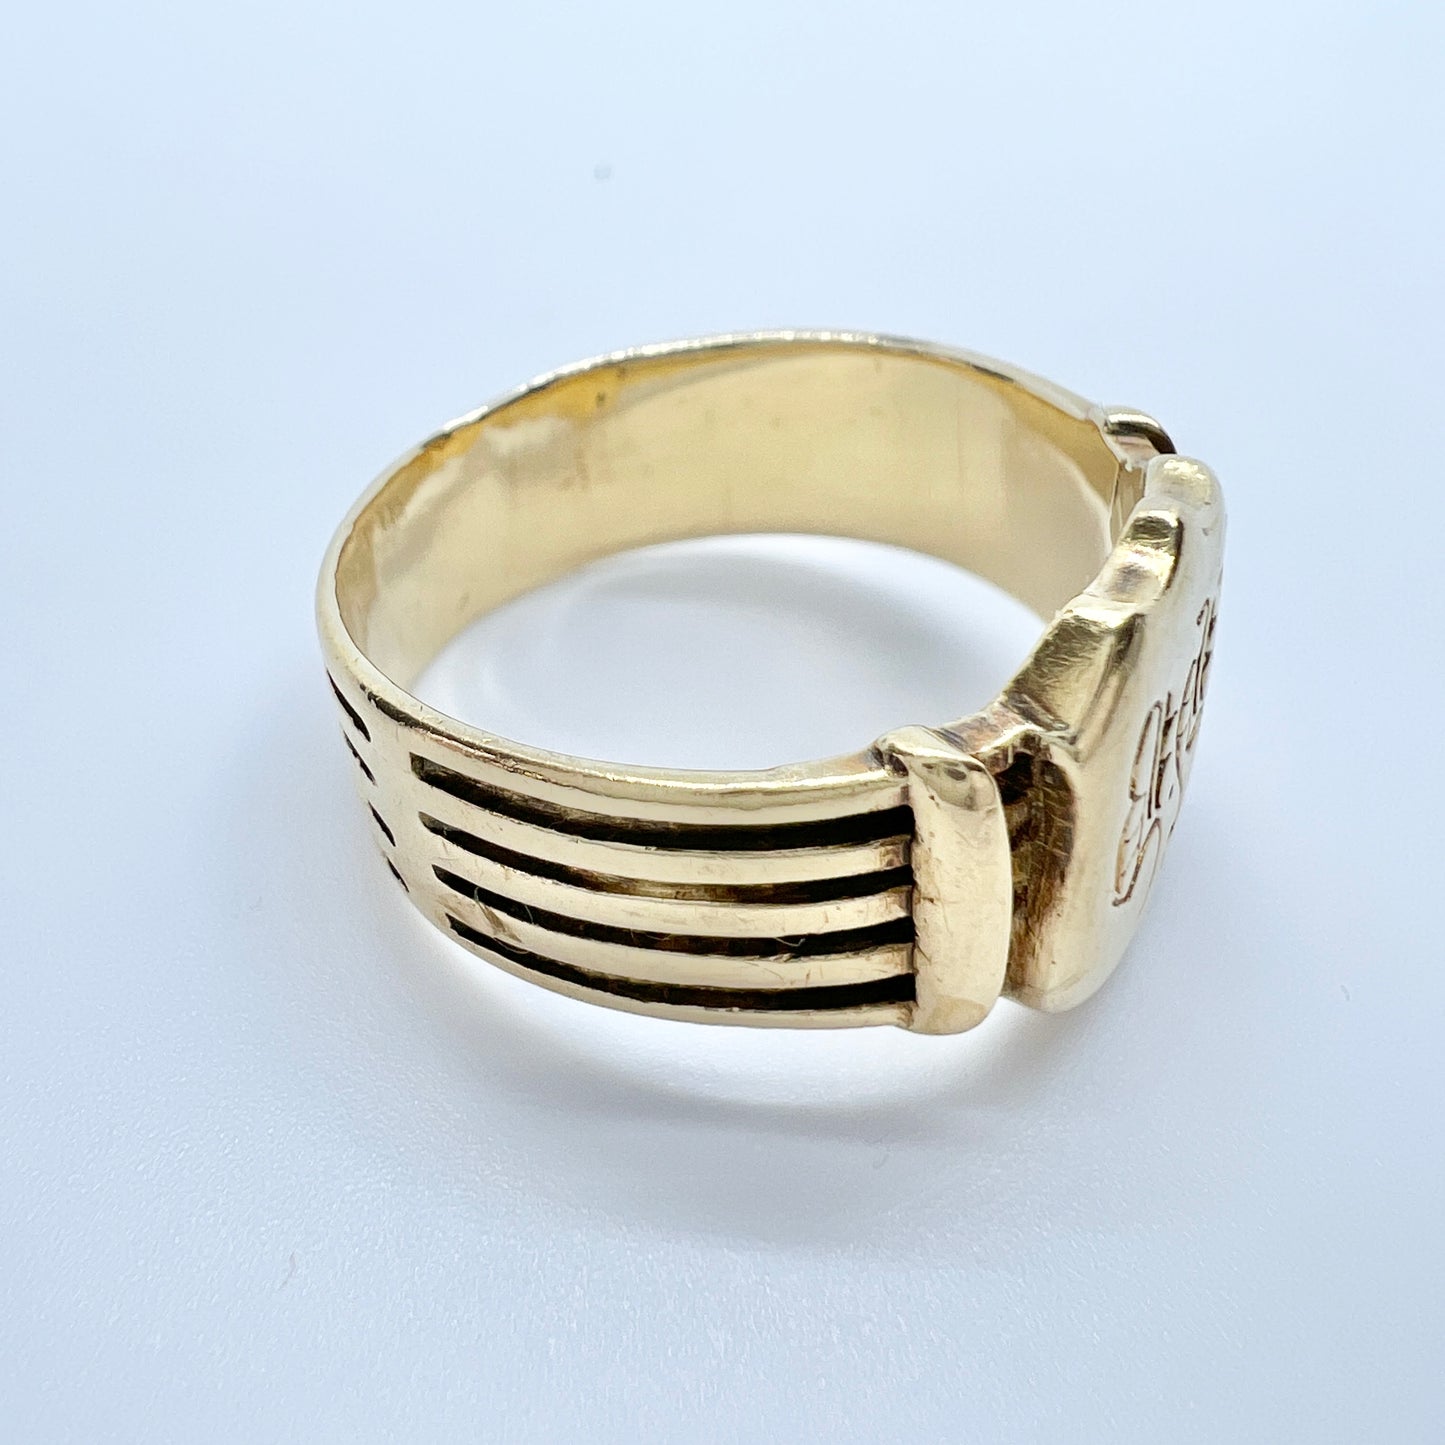 Antique Victorian 14k Gold Signet Ring.